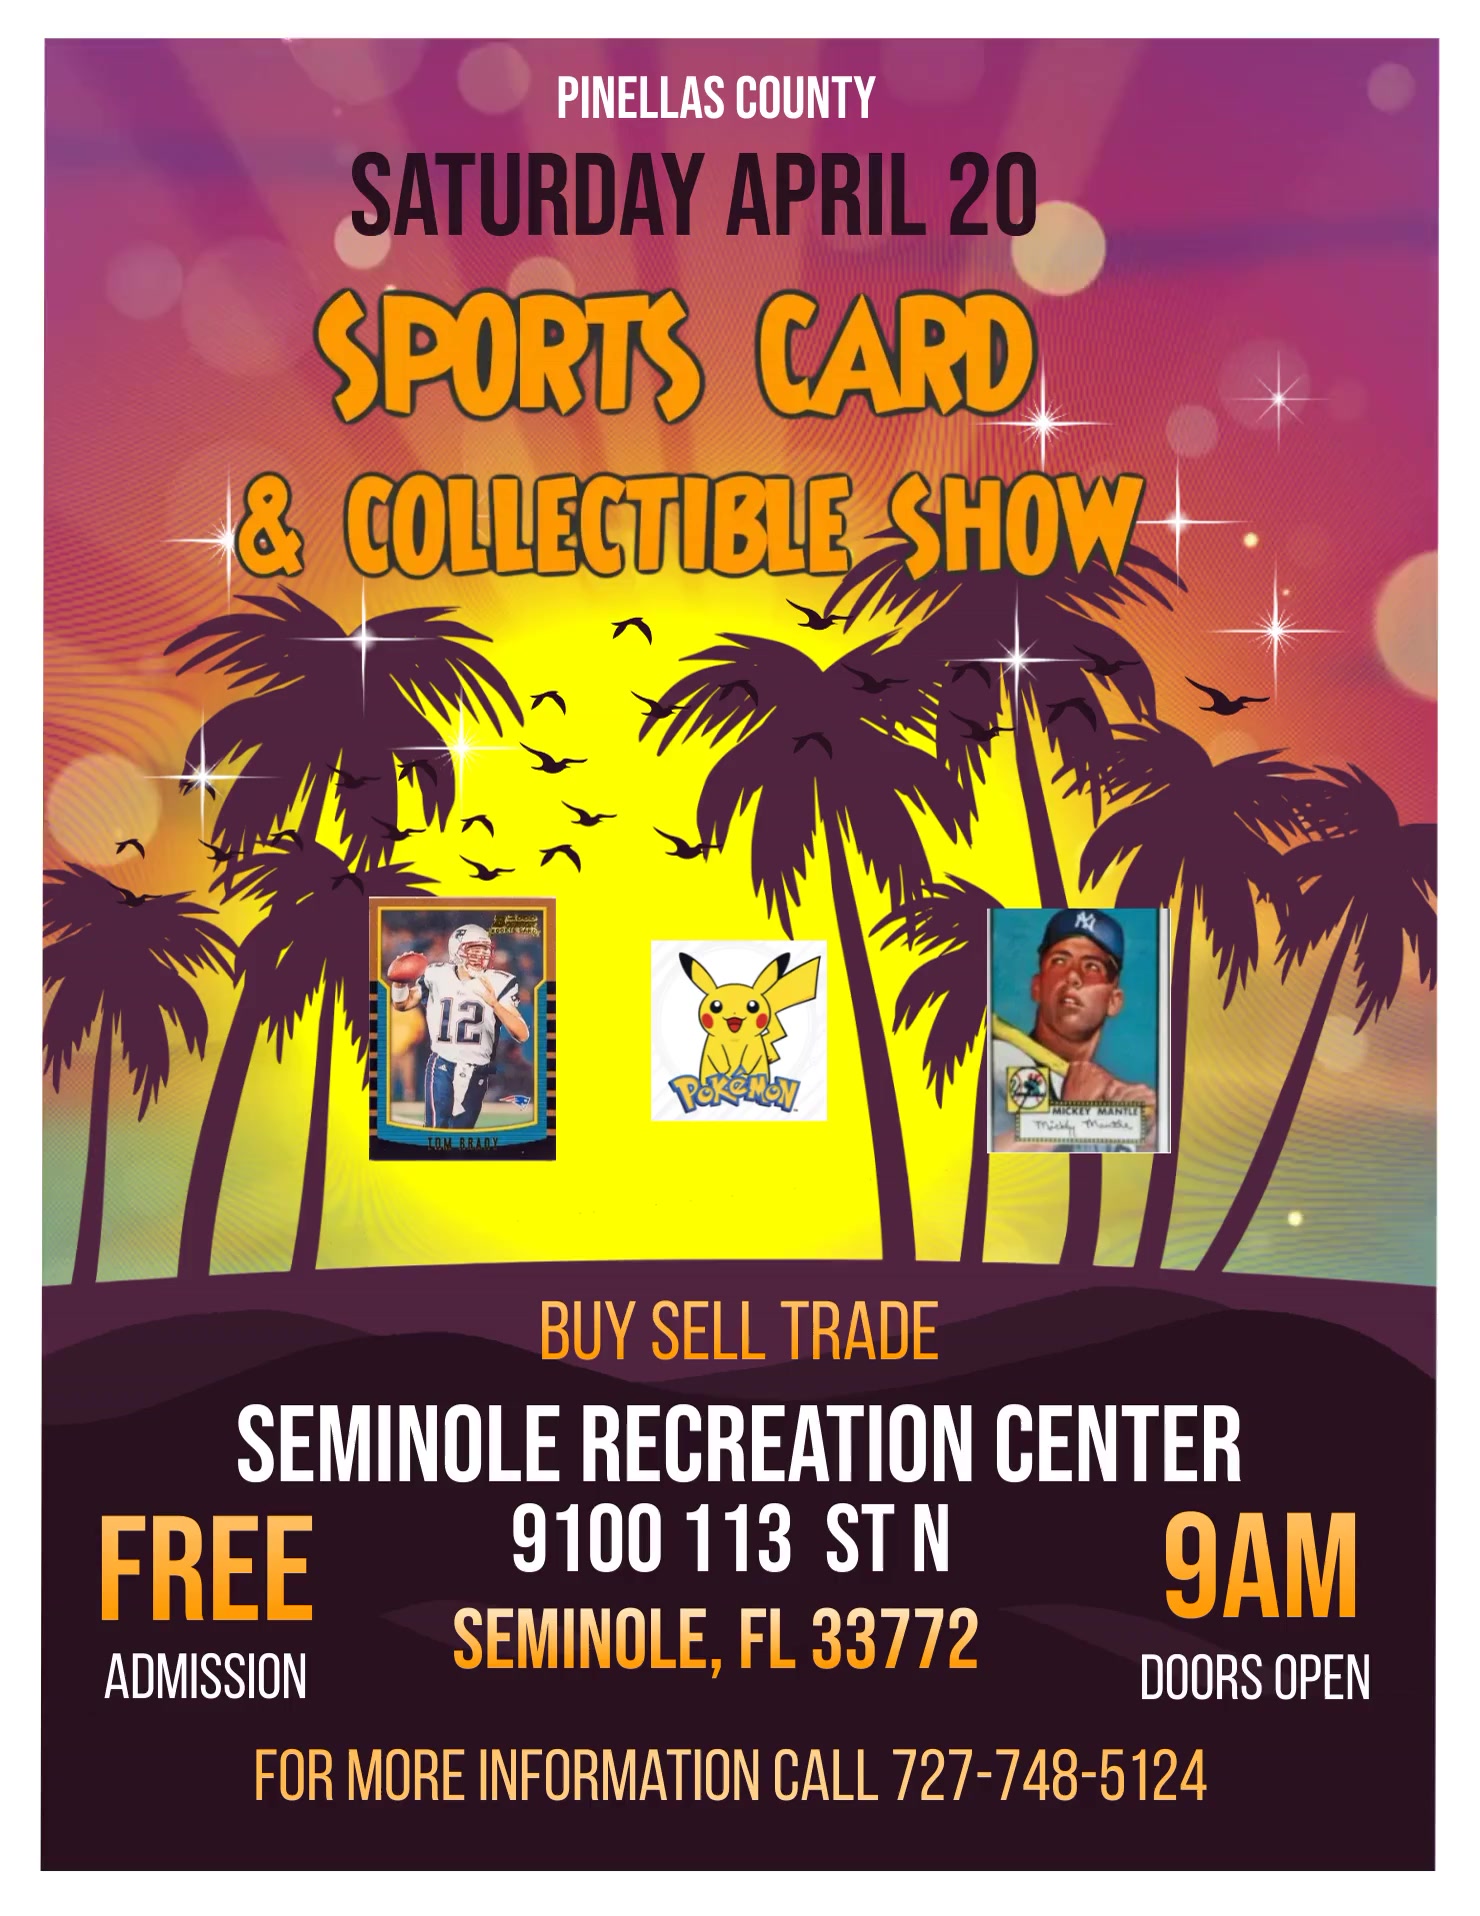 Seminole Sports Card Show - Seminole